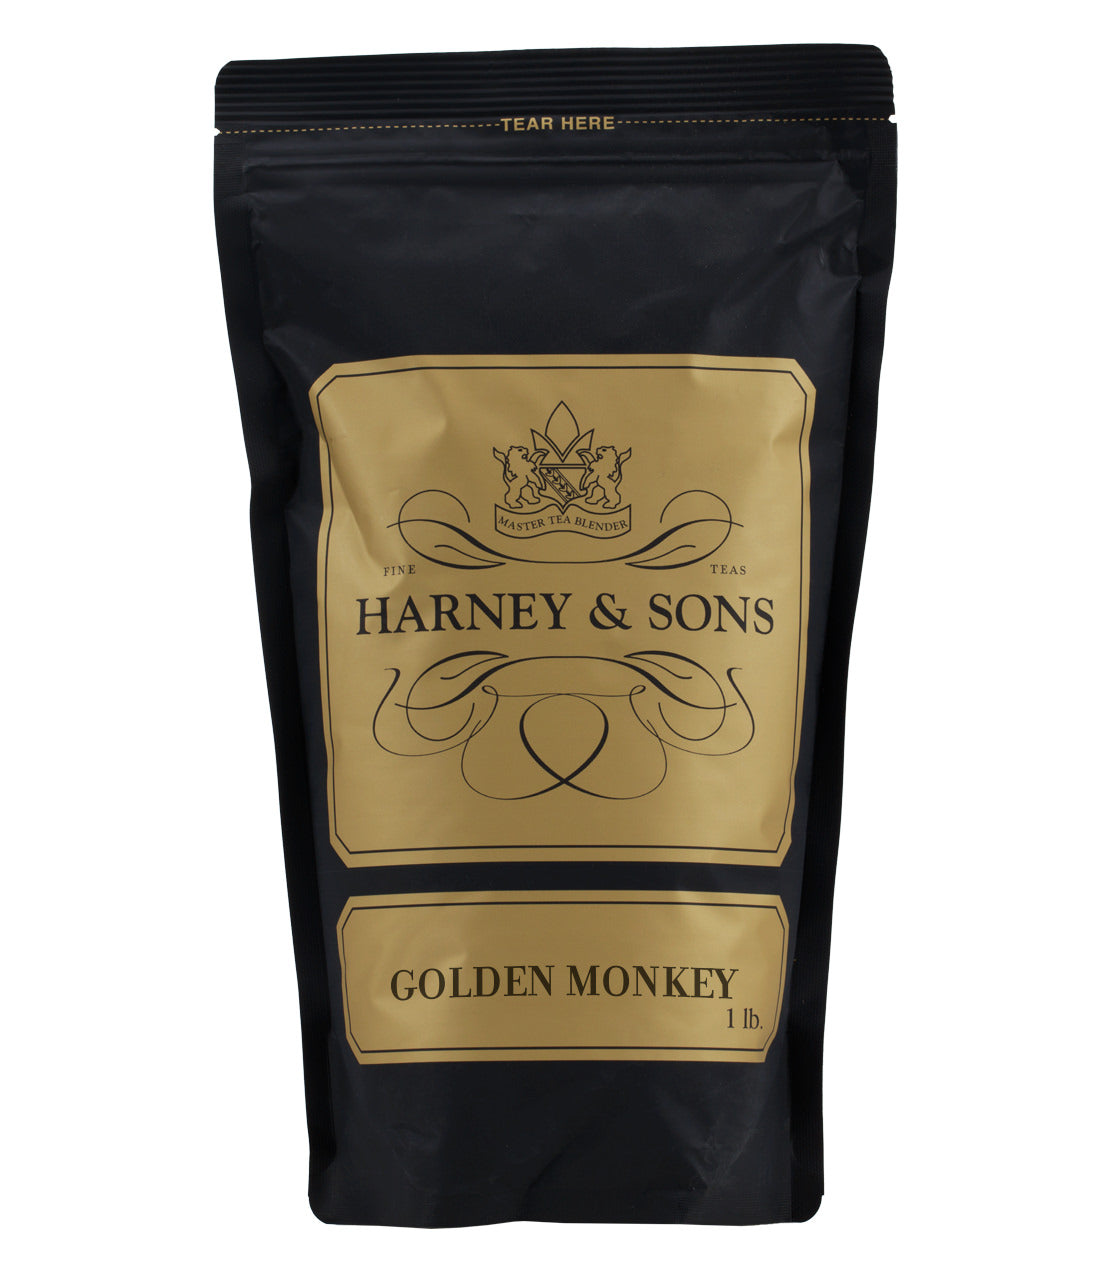 Golden Monkey - Loose 1 lb. Bag - Harney & Sons Fine Teas